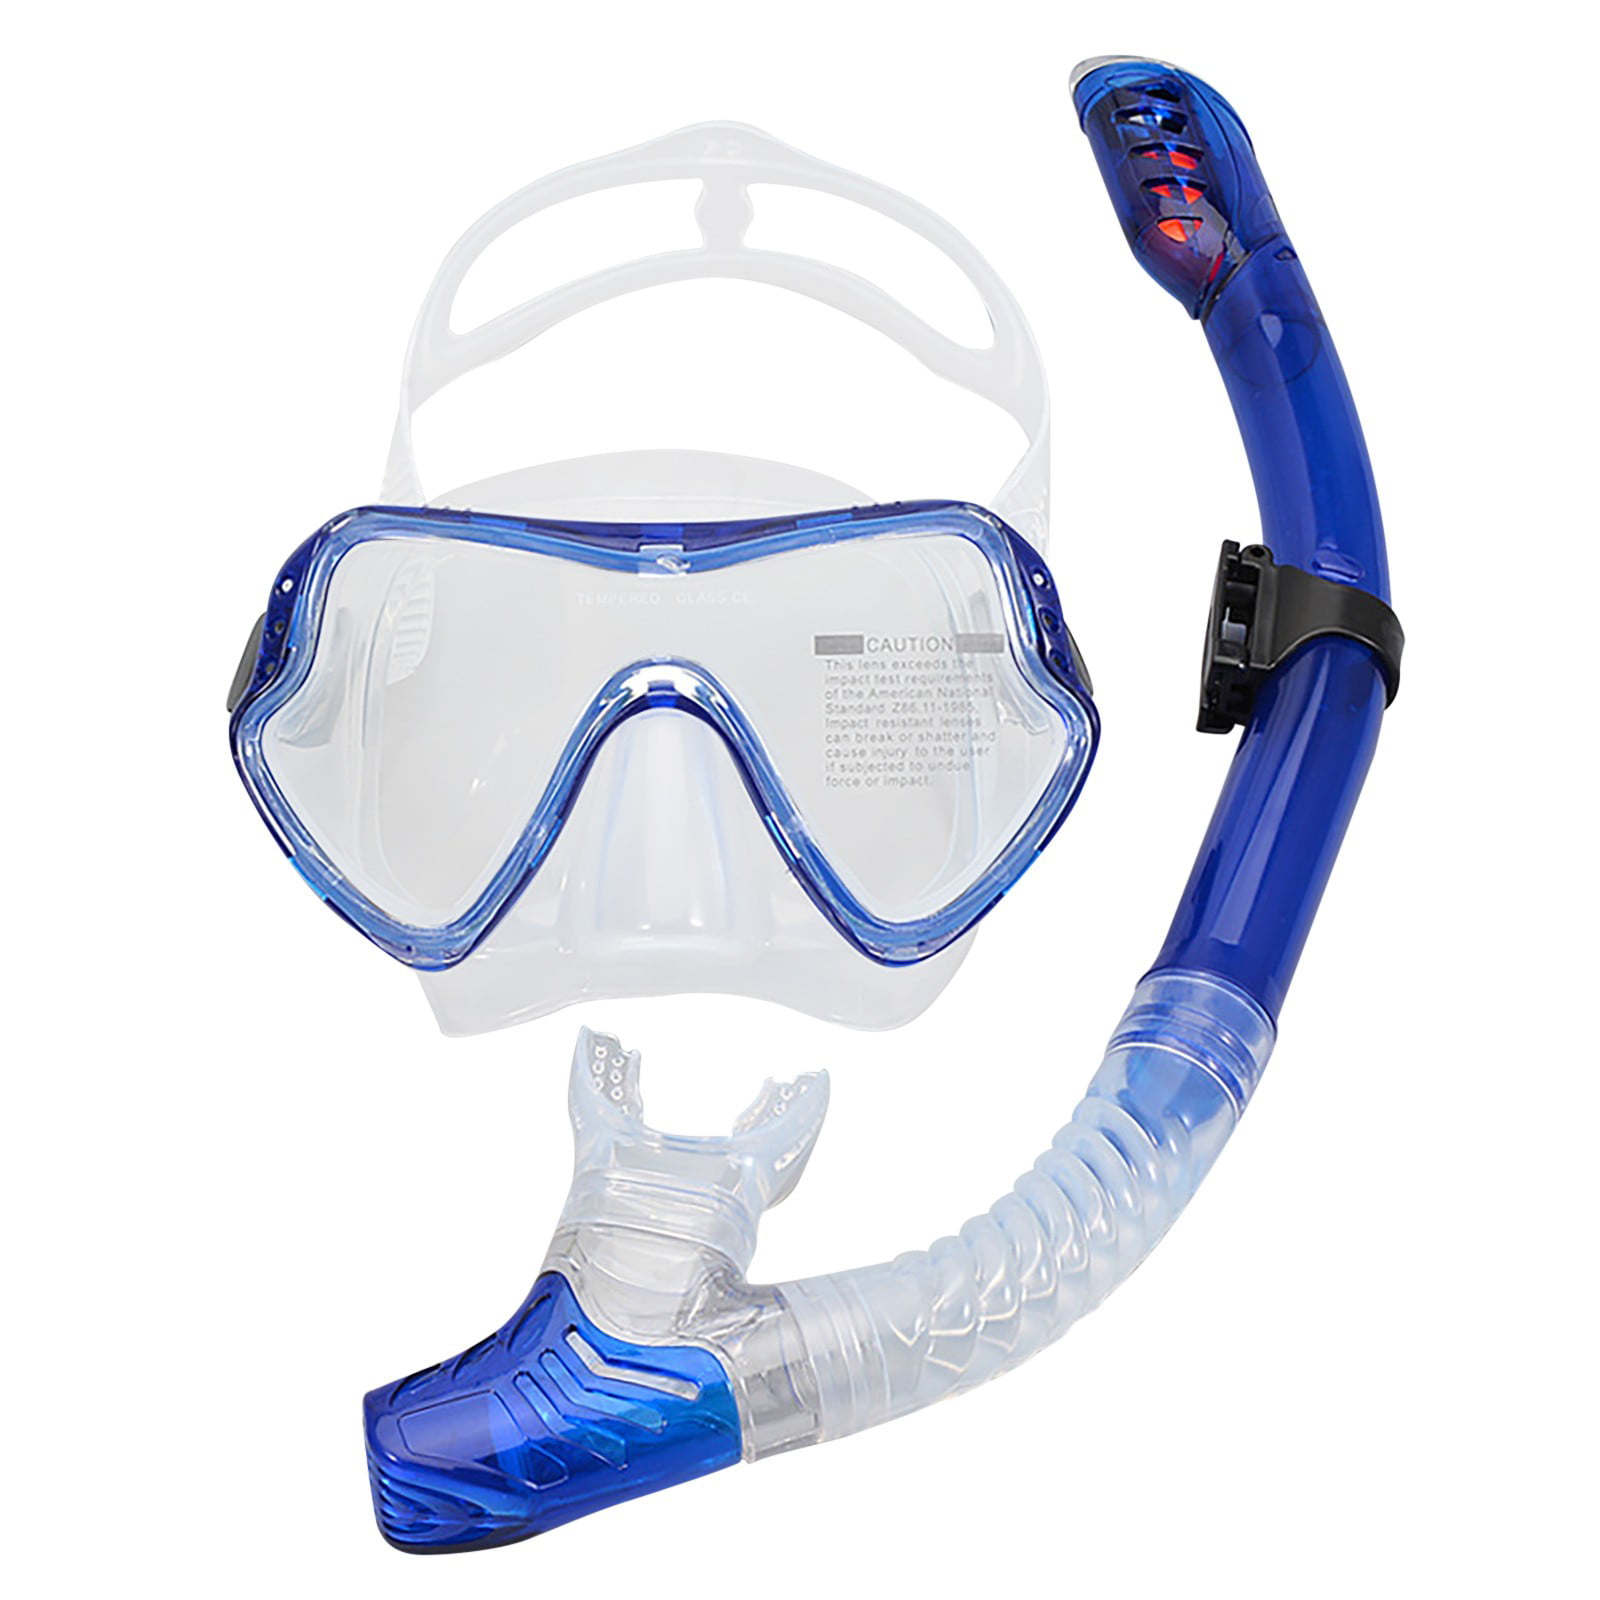 Details about   Kids Comfortable Swimming Goggles Anti-Fog Swim Glasses Jr Mask Dry Snorkel Set 